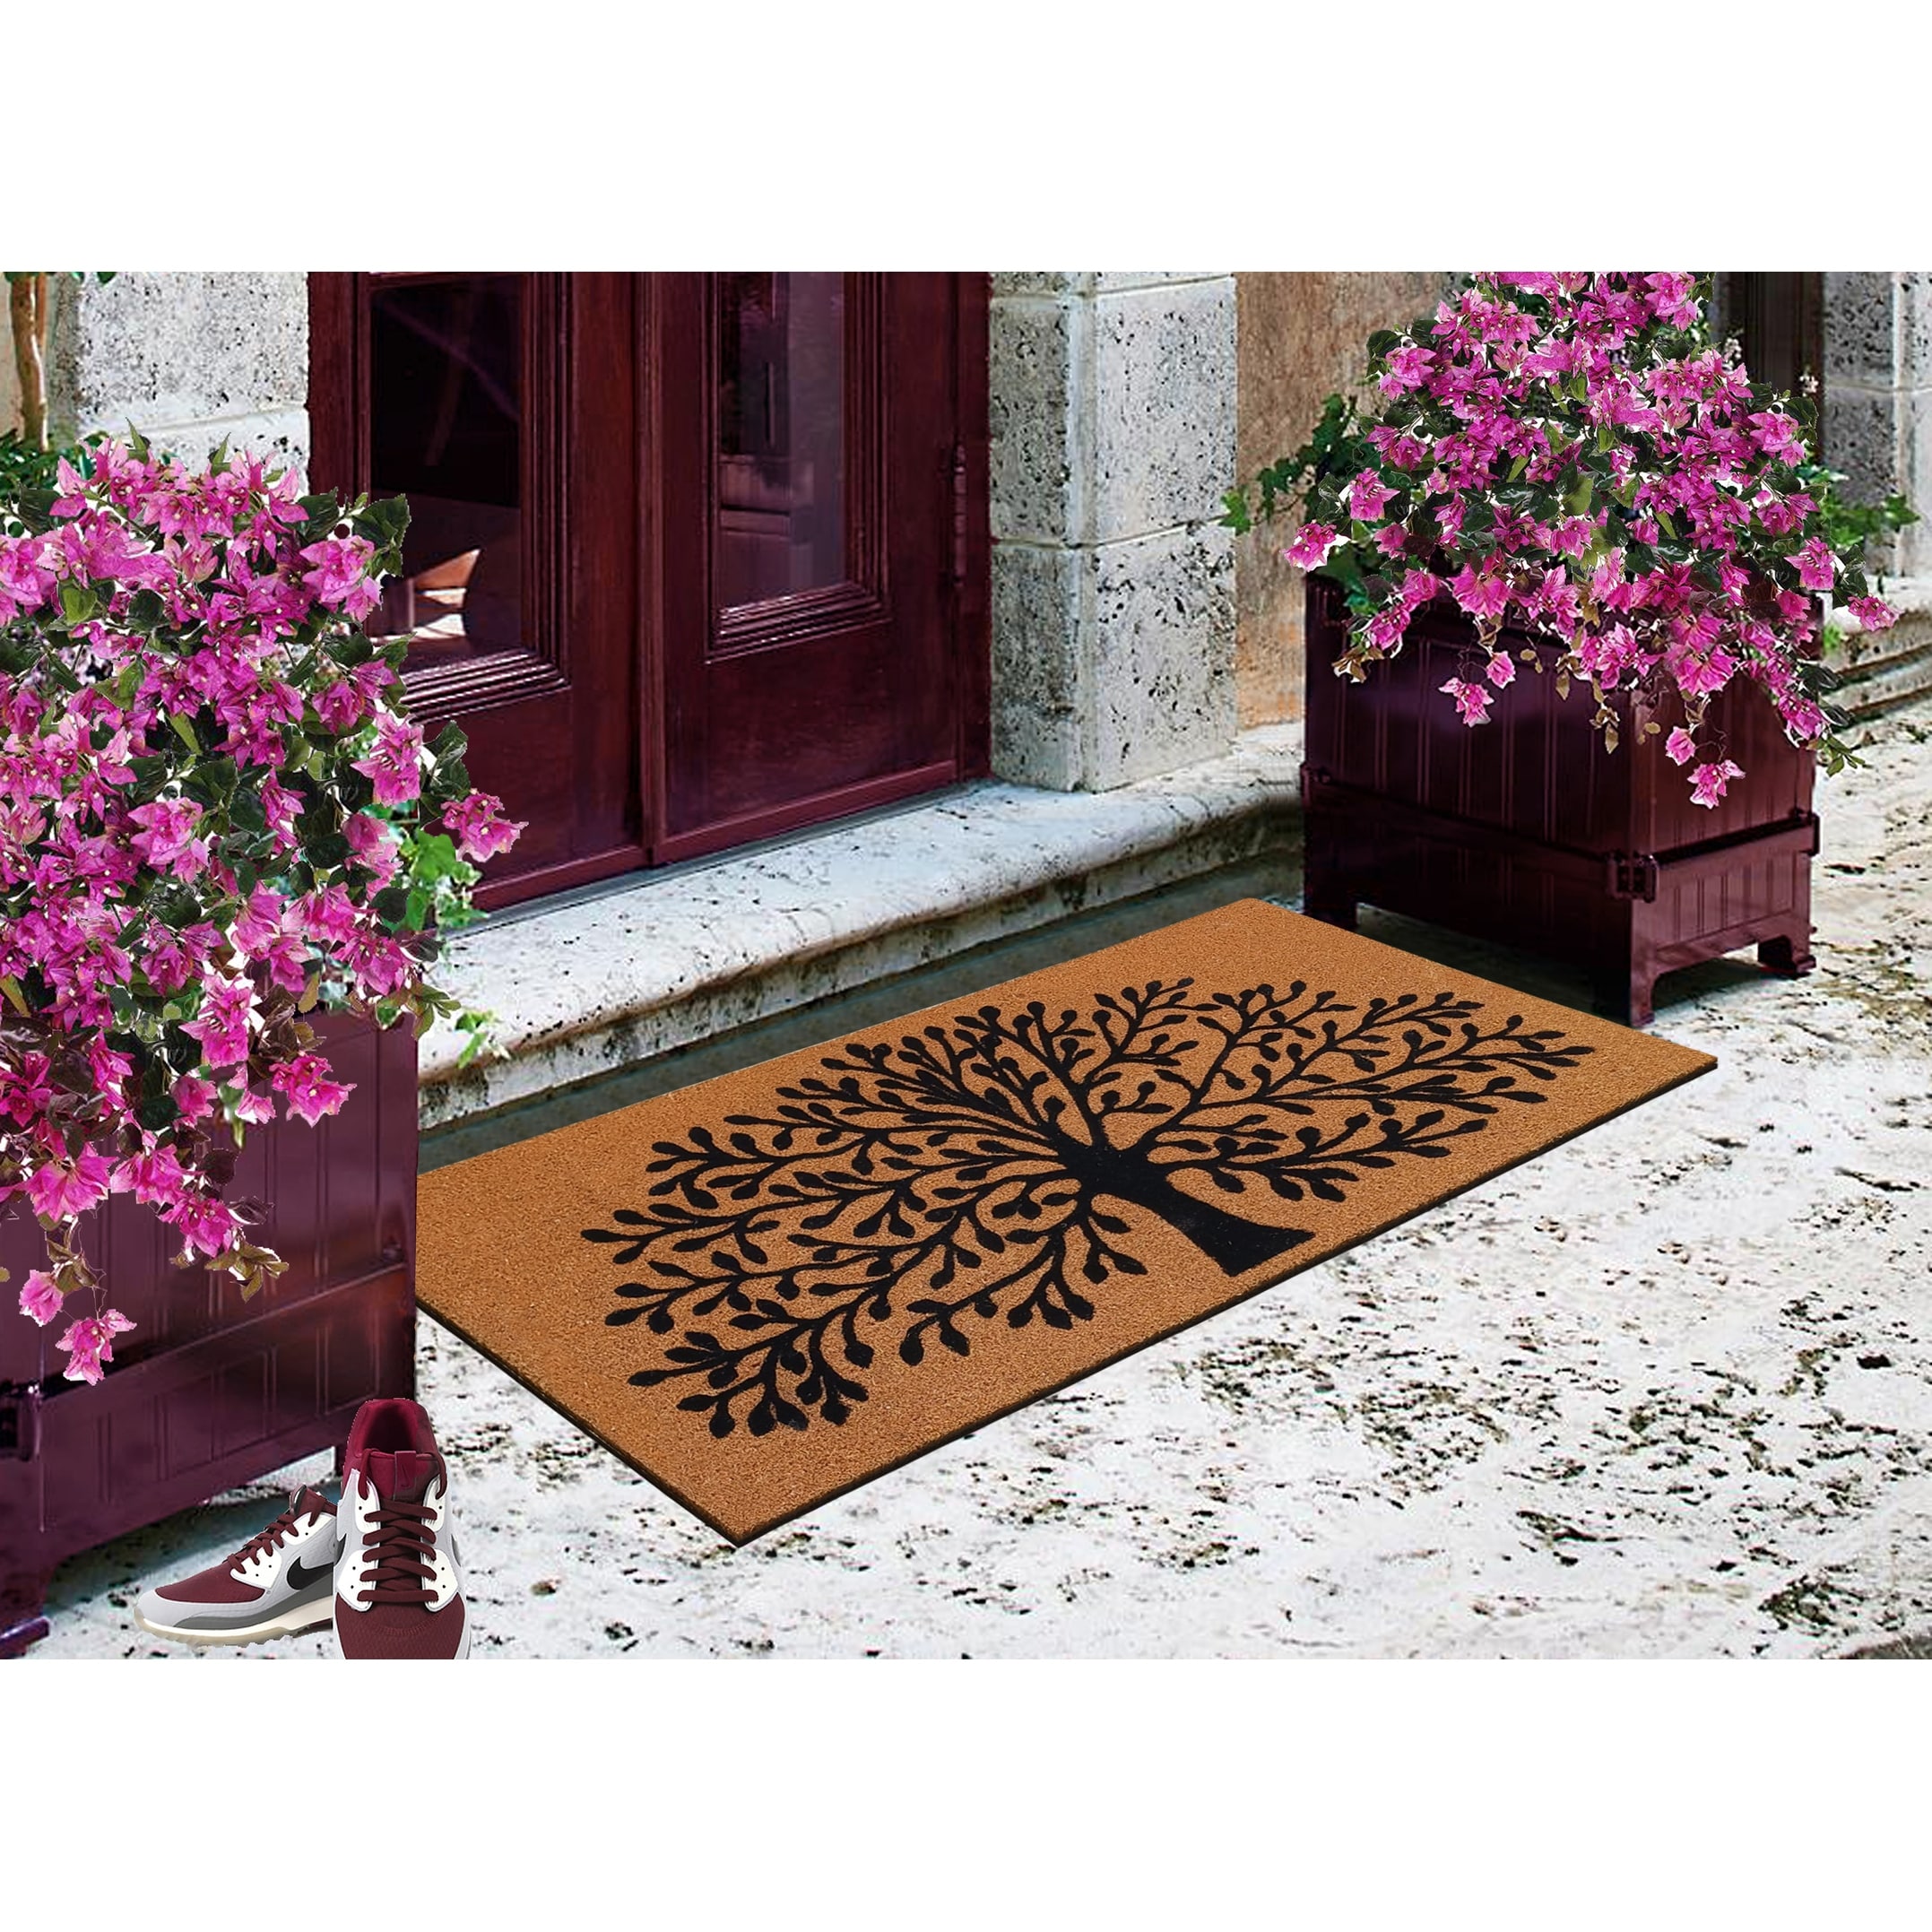 32x47 Front Door Mats Outdoor Indoor-SOCOOL Thick Non Slip Rubber Outdoor  Welcome Mat Rug Outdoor Door mats For Outside Inside Entry Home Entrance -  Burgundy Flower,DM2426H 